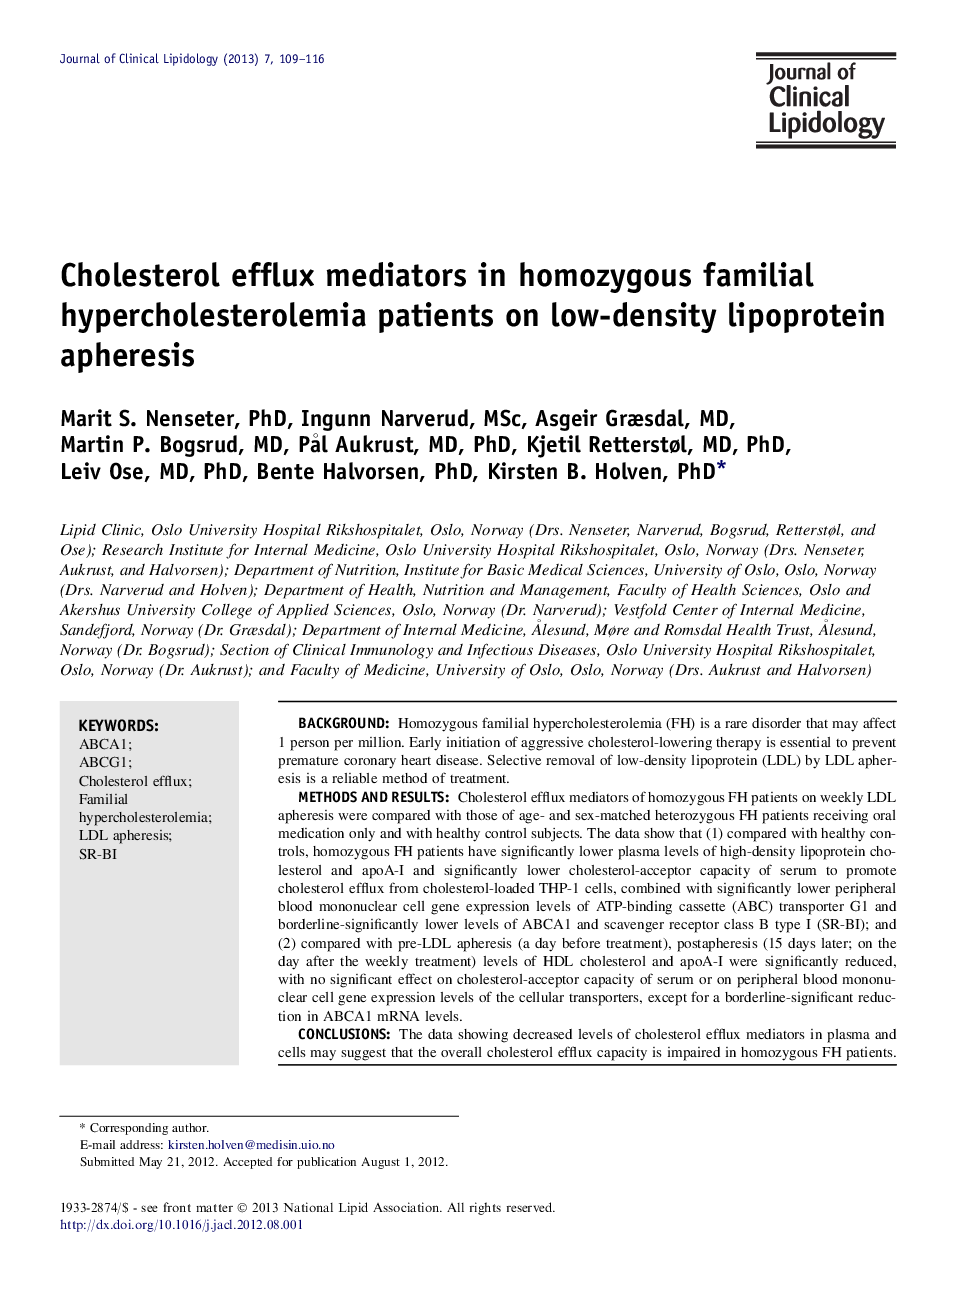 Cholesterol efflux mediators in homozygous familial hypercholesterolemia patients on low-density lipoprotein apheresis